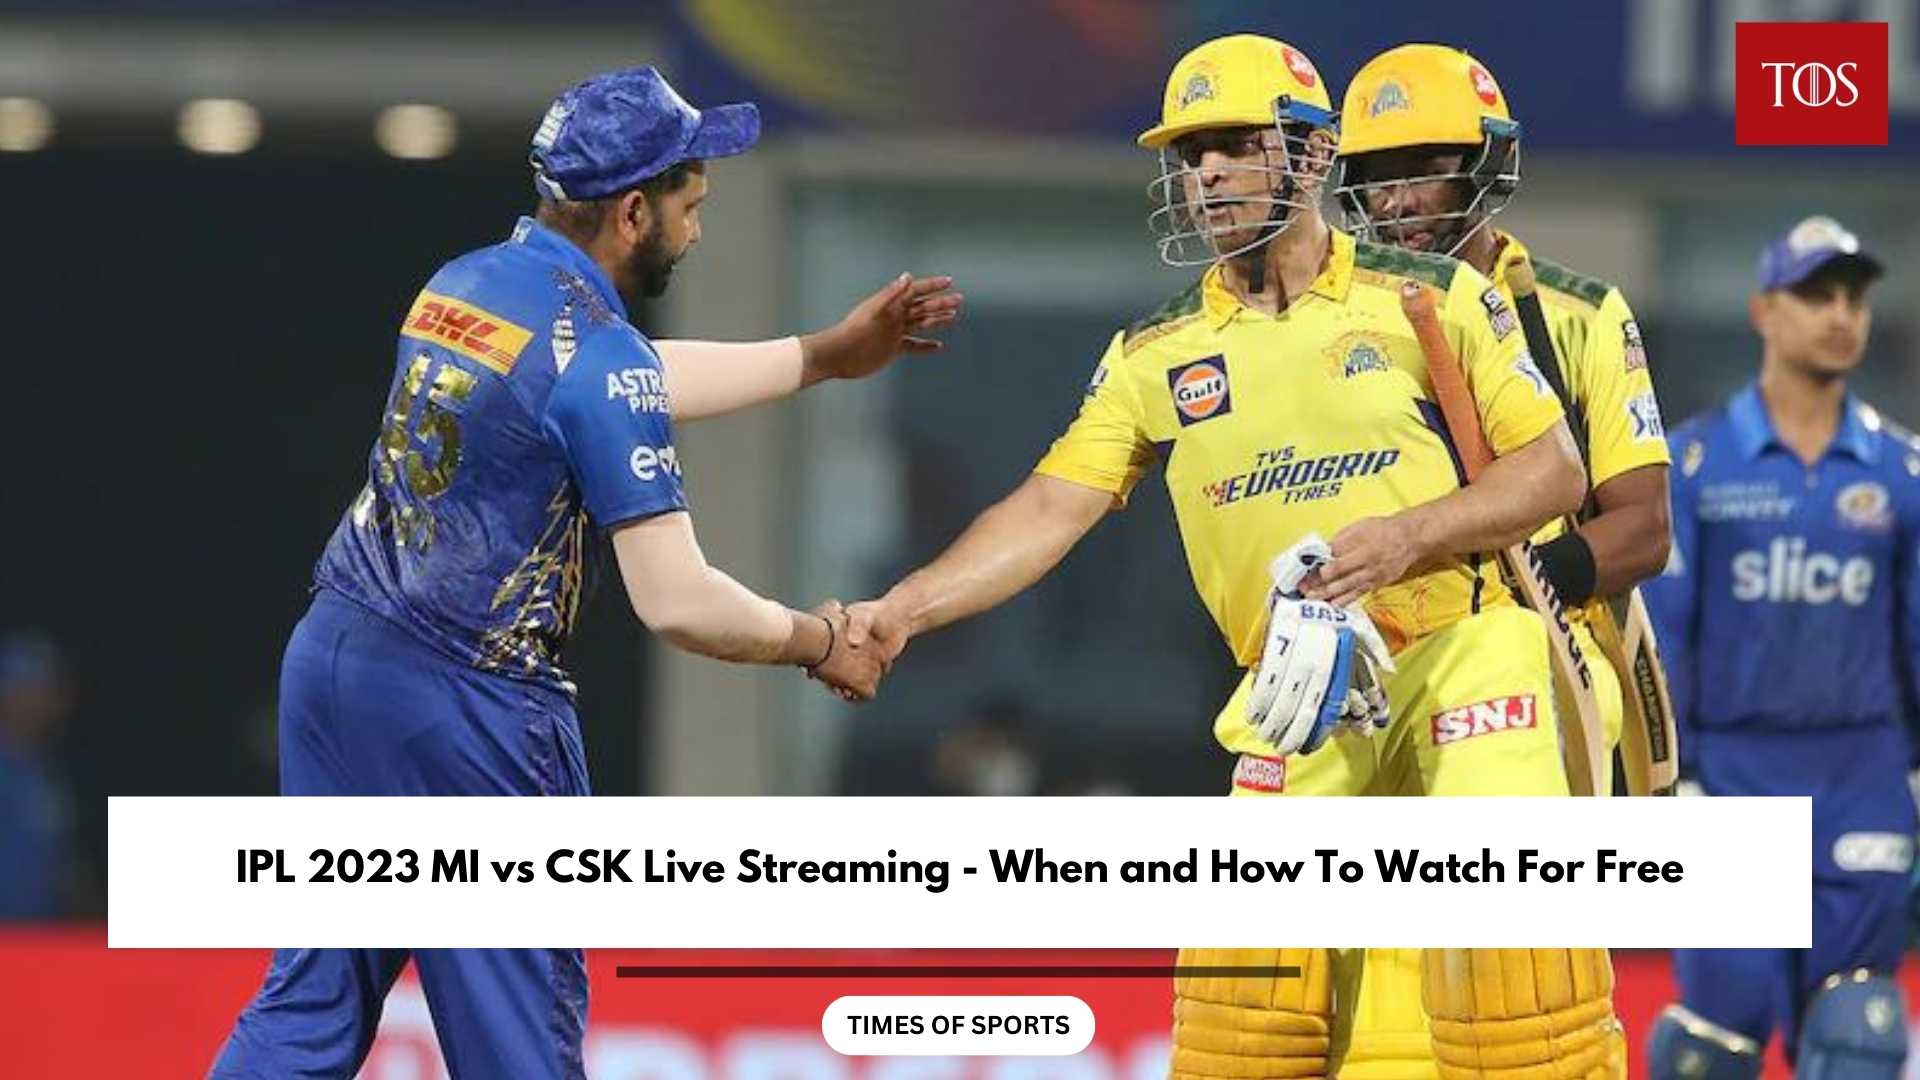 IPL 2023 MI vs CSK Live Streaming